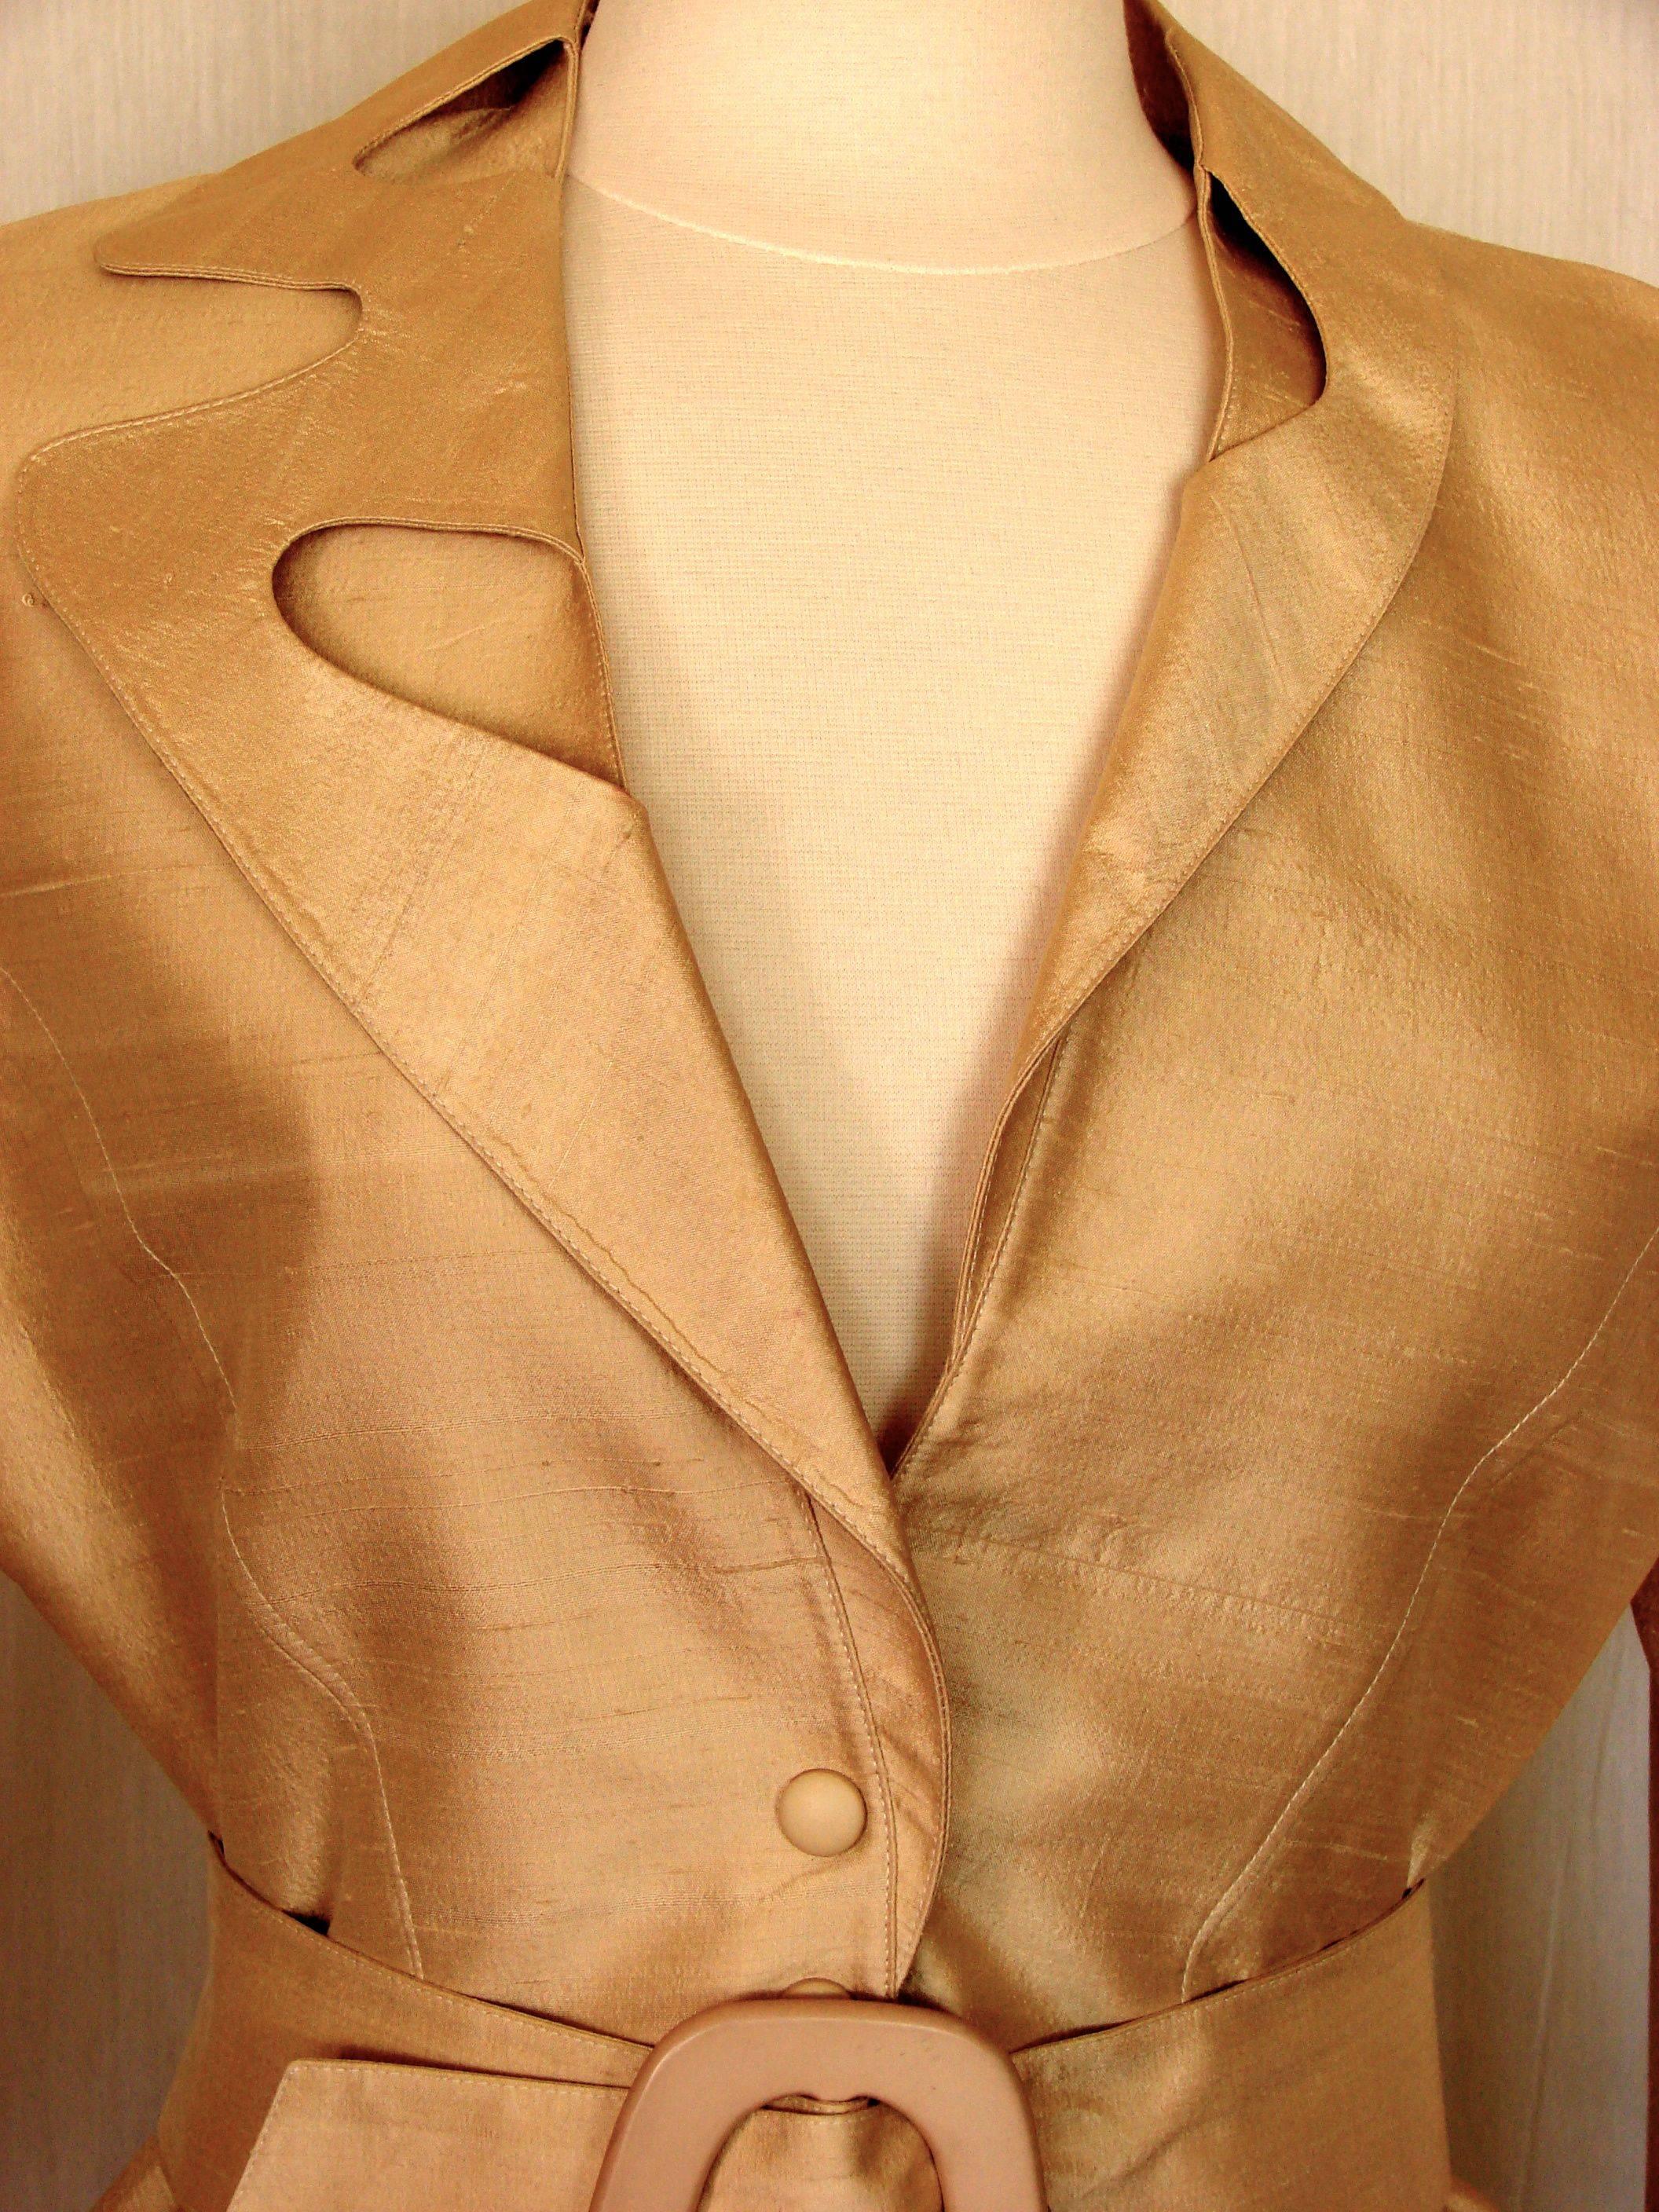 Thierry Mugler Paris Sculptural Gold Doupioni Silk Jacket + Belt Set Size 40 198 2